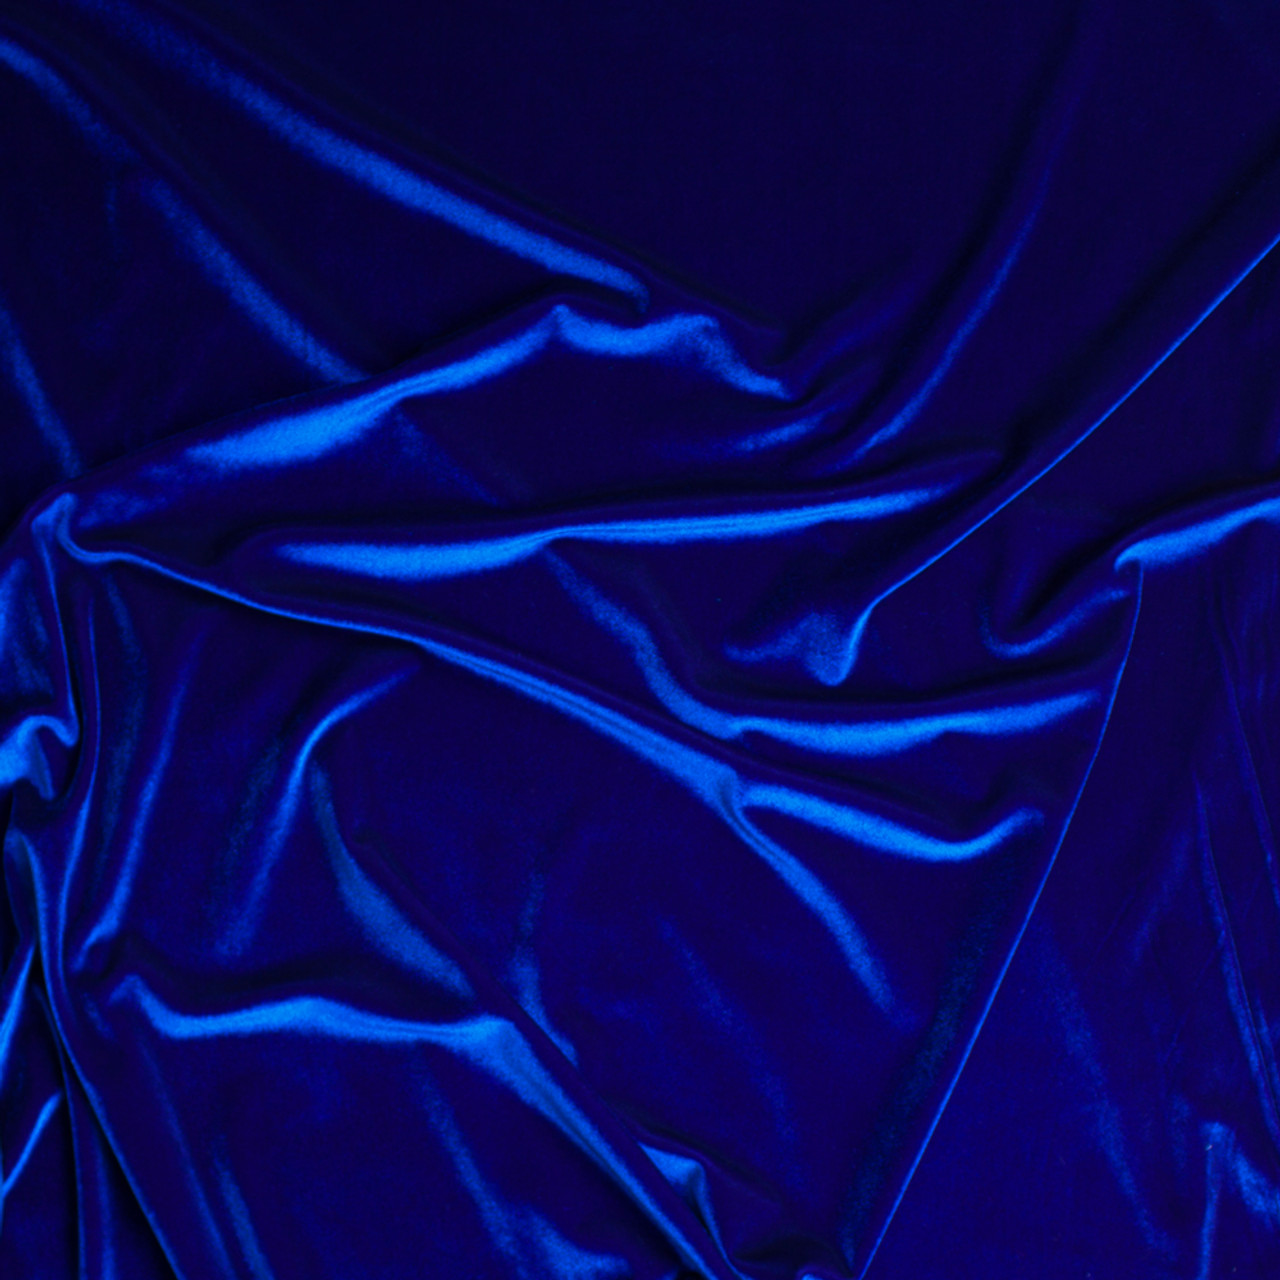 Cali Fabrics Royal Blue 4-way Stretch Velvet By The Yard